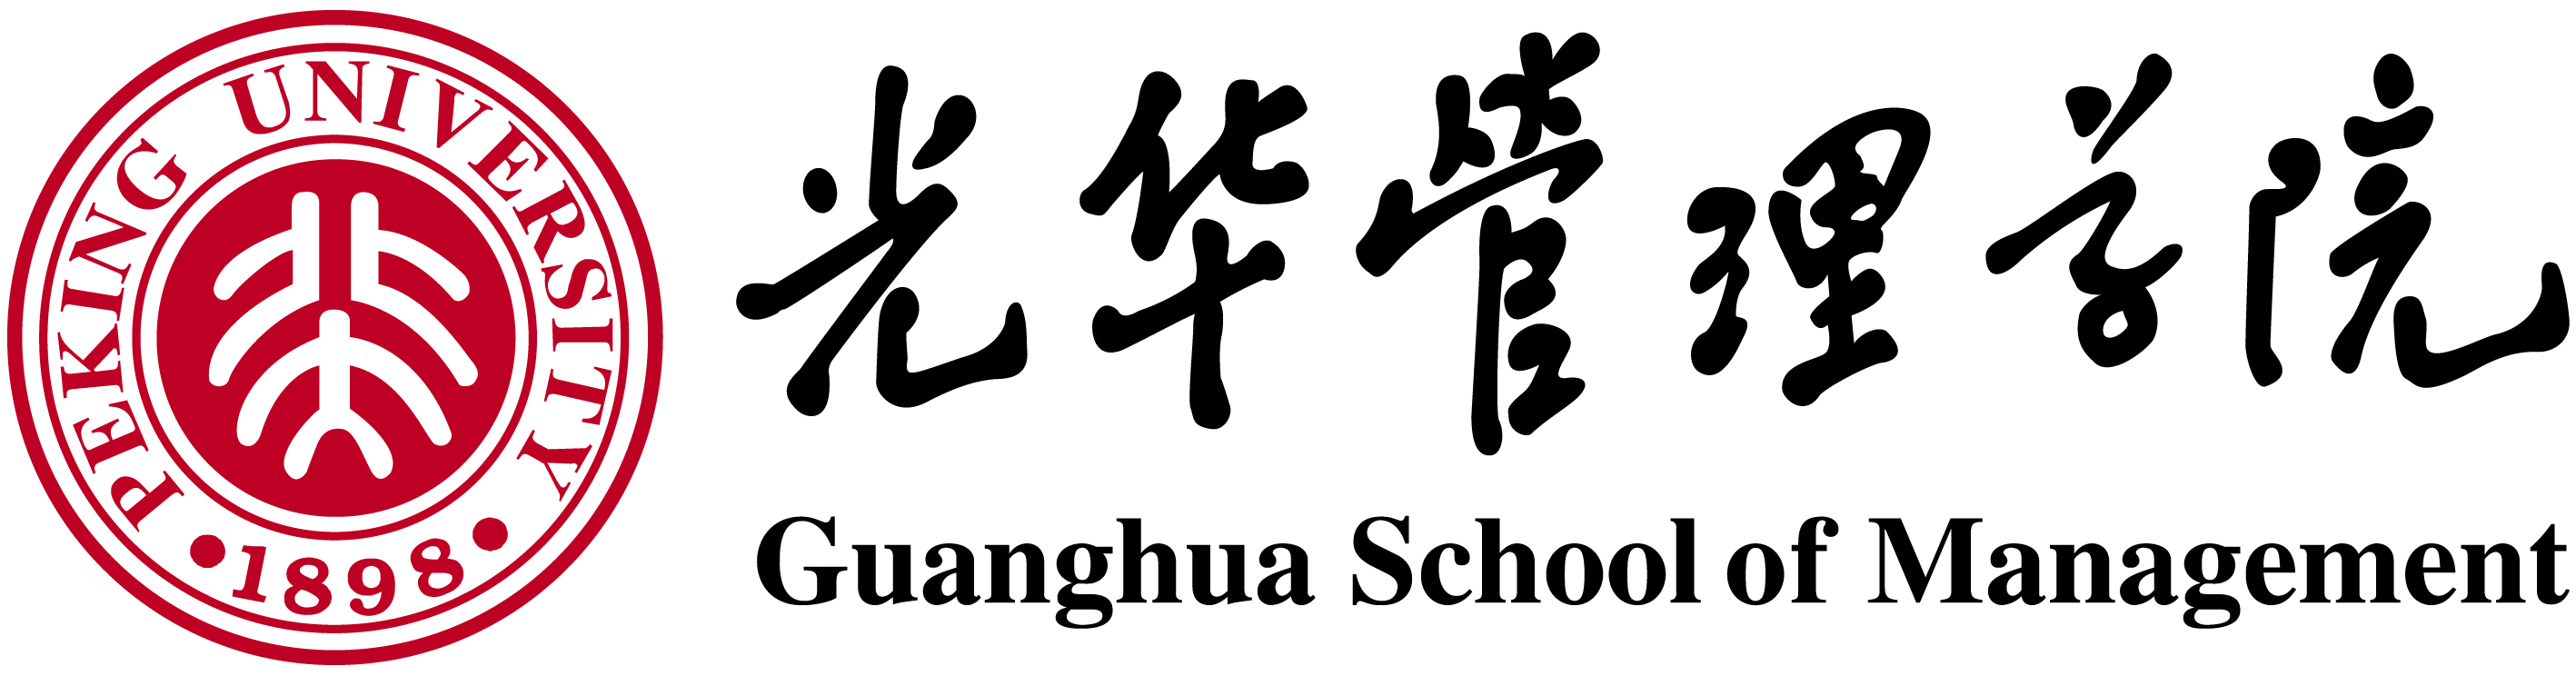 Logo Peking University - Guanghua School of Management 